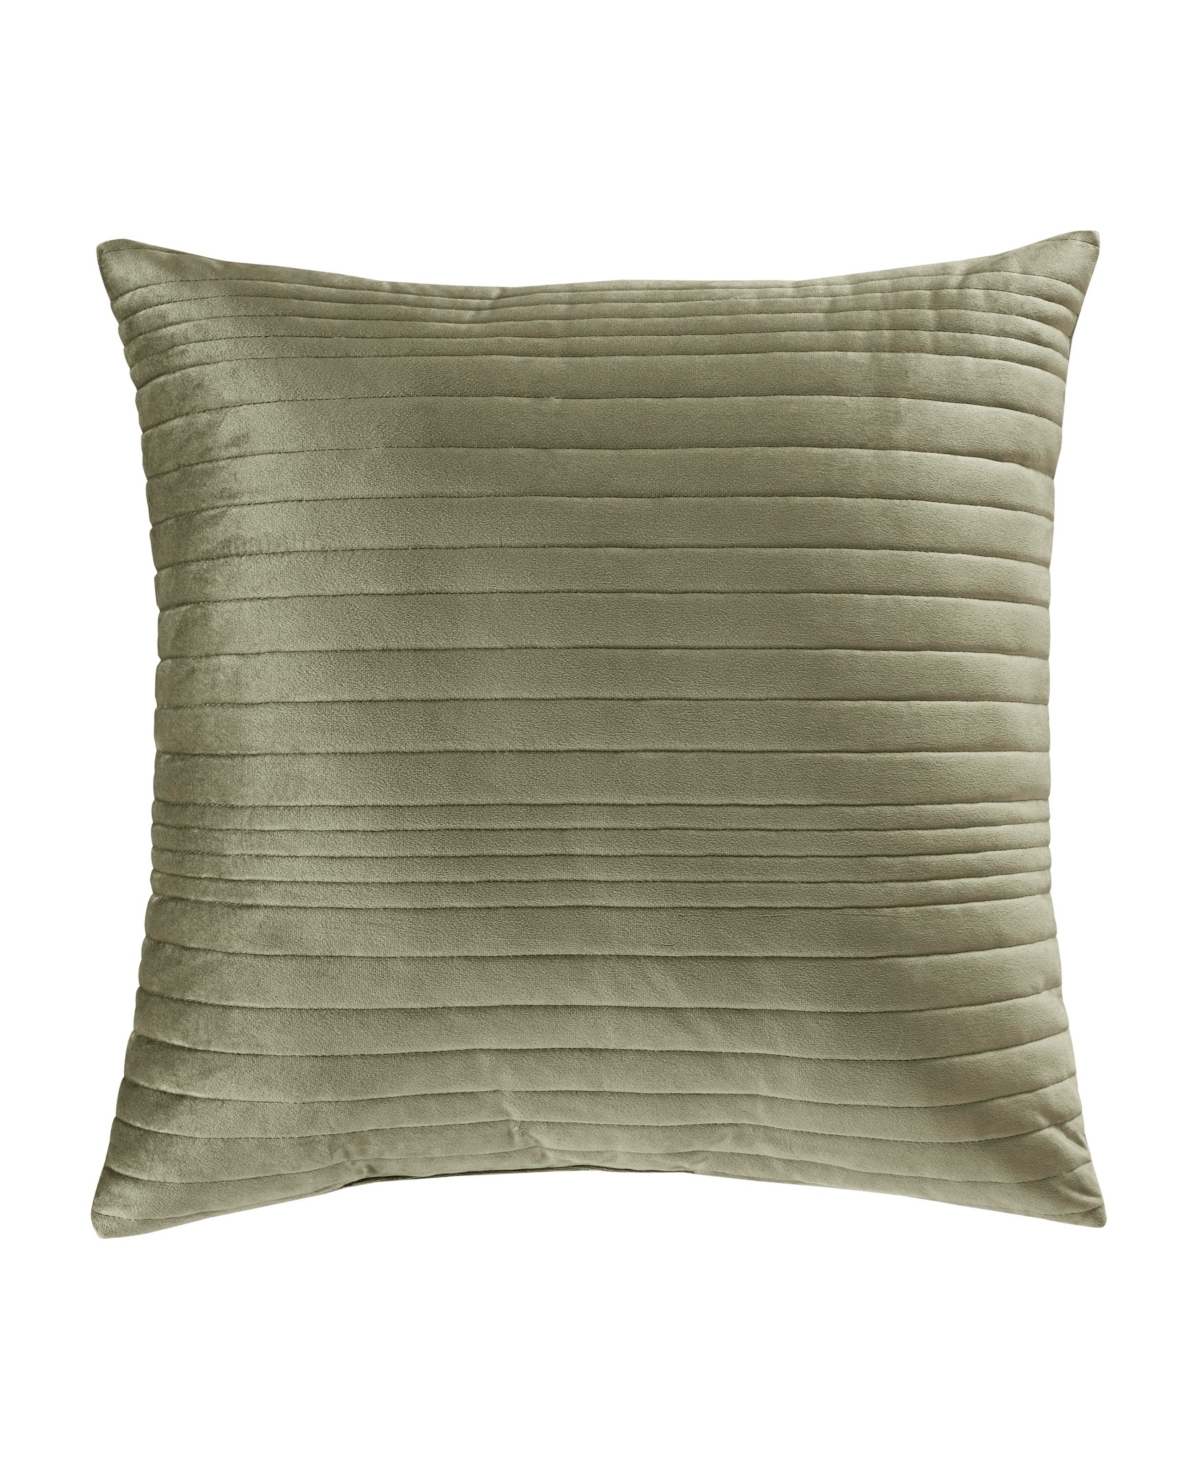 Oscar Oliver Mercer Decorative Pillow, 20" X 20" Bedding In Olive